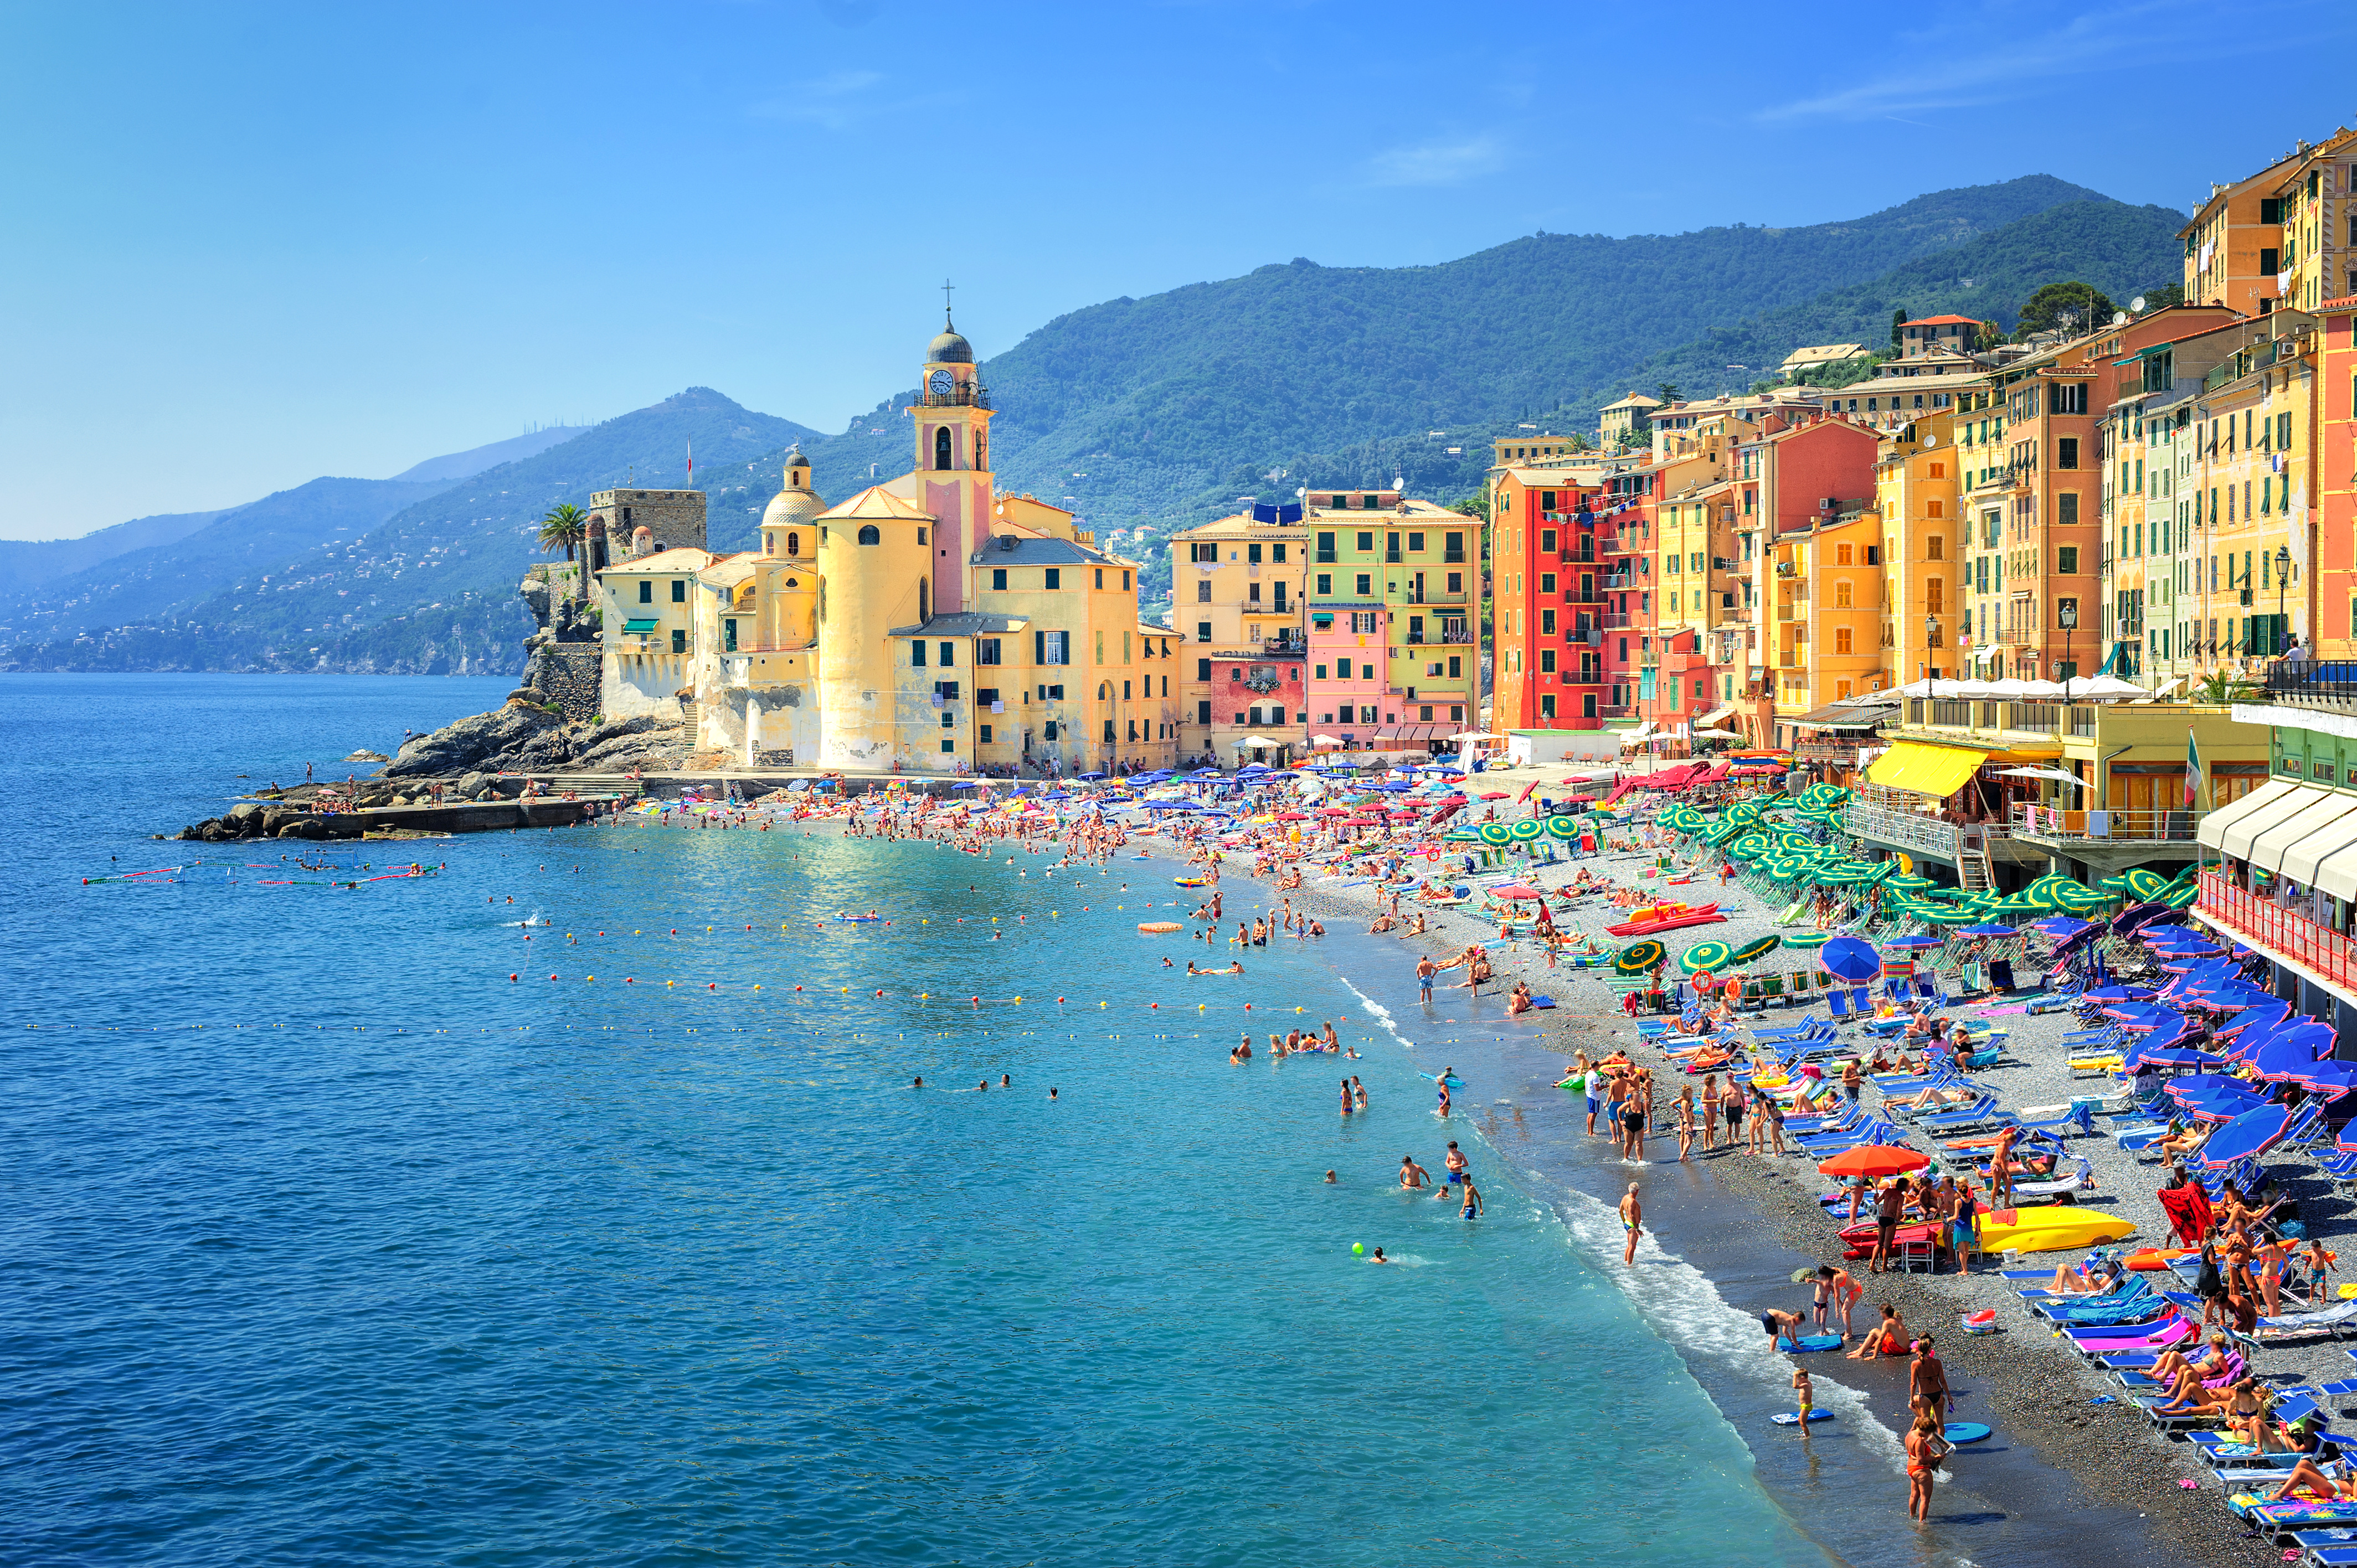 Genoa Italy 4k Ultra HD Wallpaper Background Image